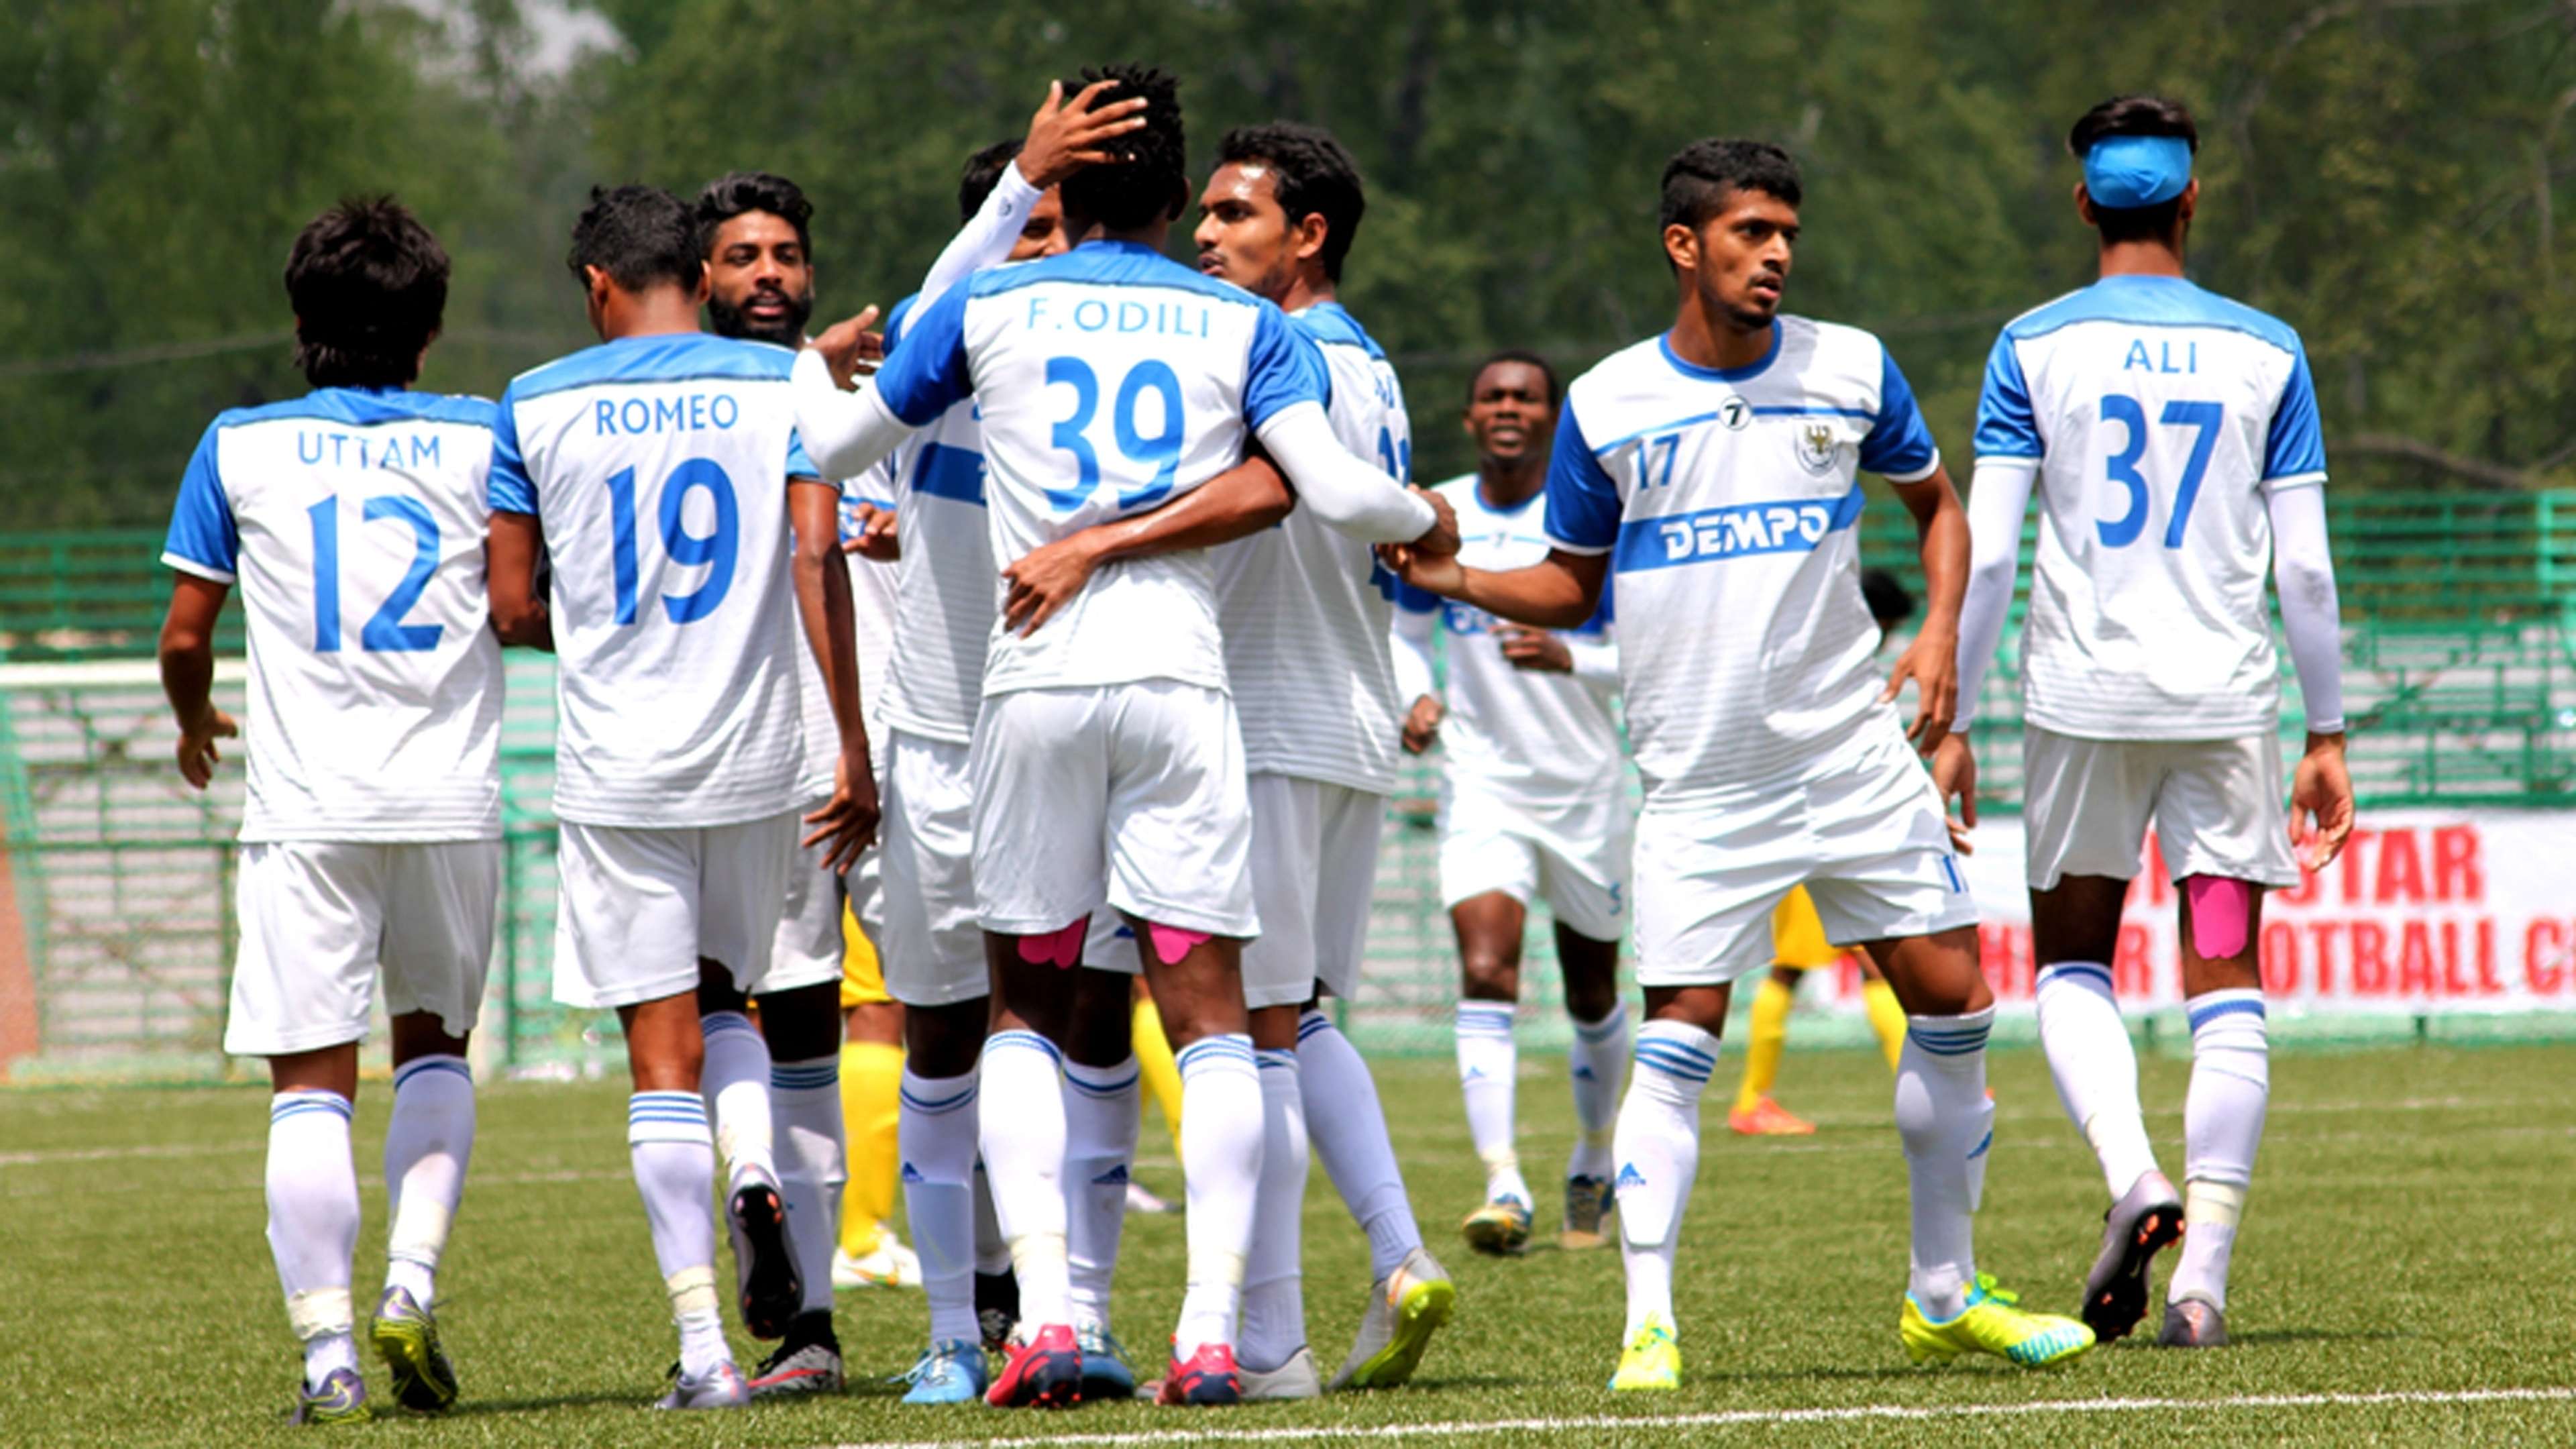 Lone Star Kashmir FC Dempo SC 2nd Division I-League